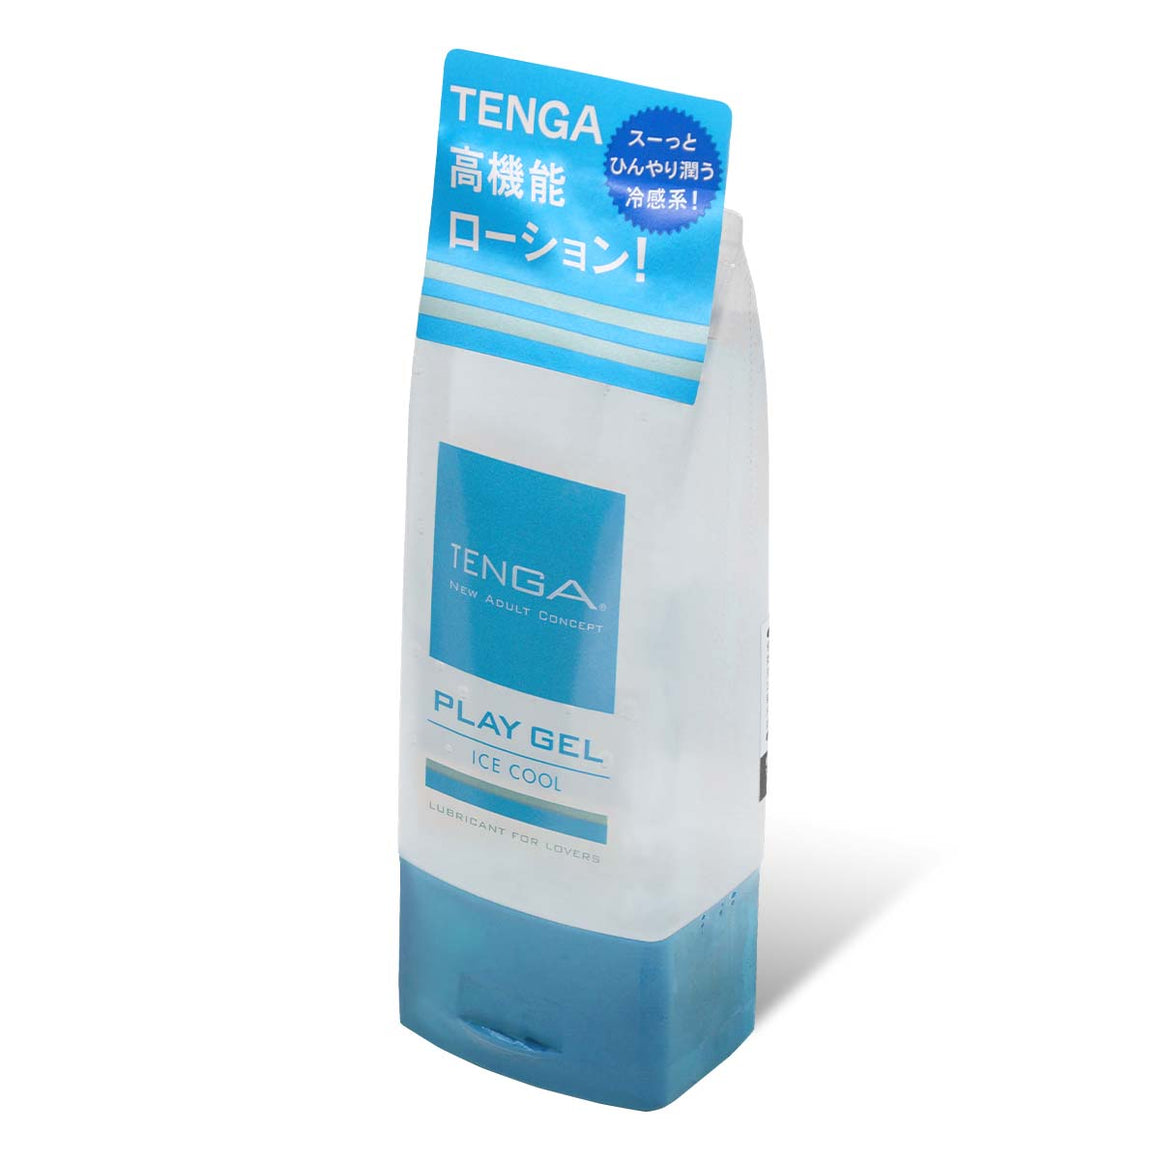 TENGA PLAY GEL ICE COOL 160ml 水性潤滑劑